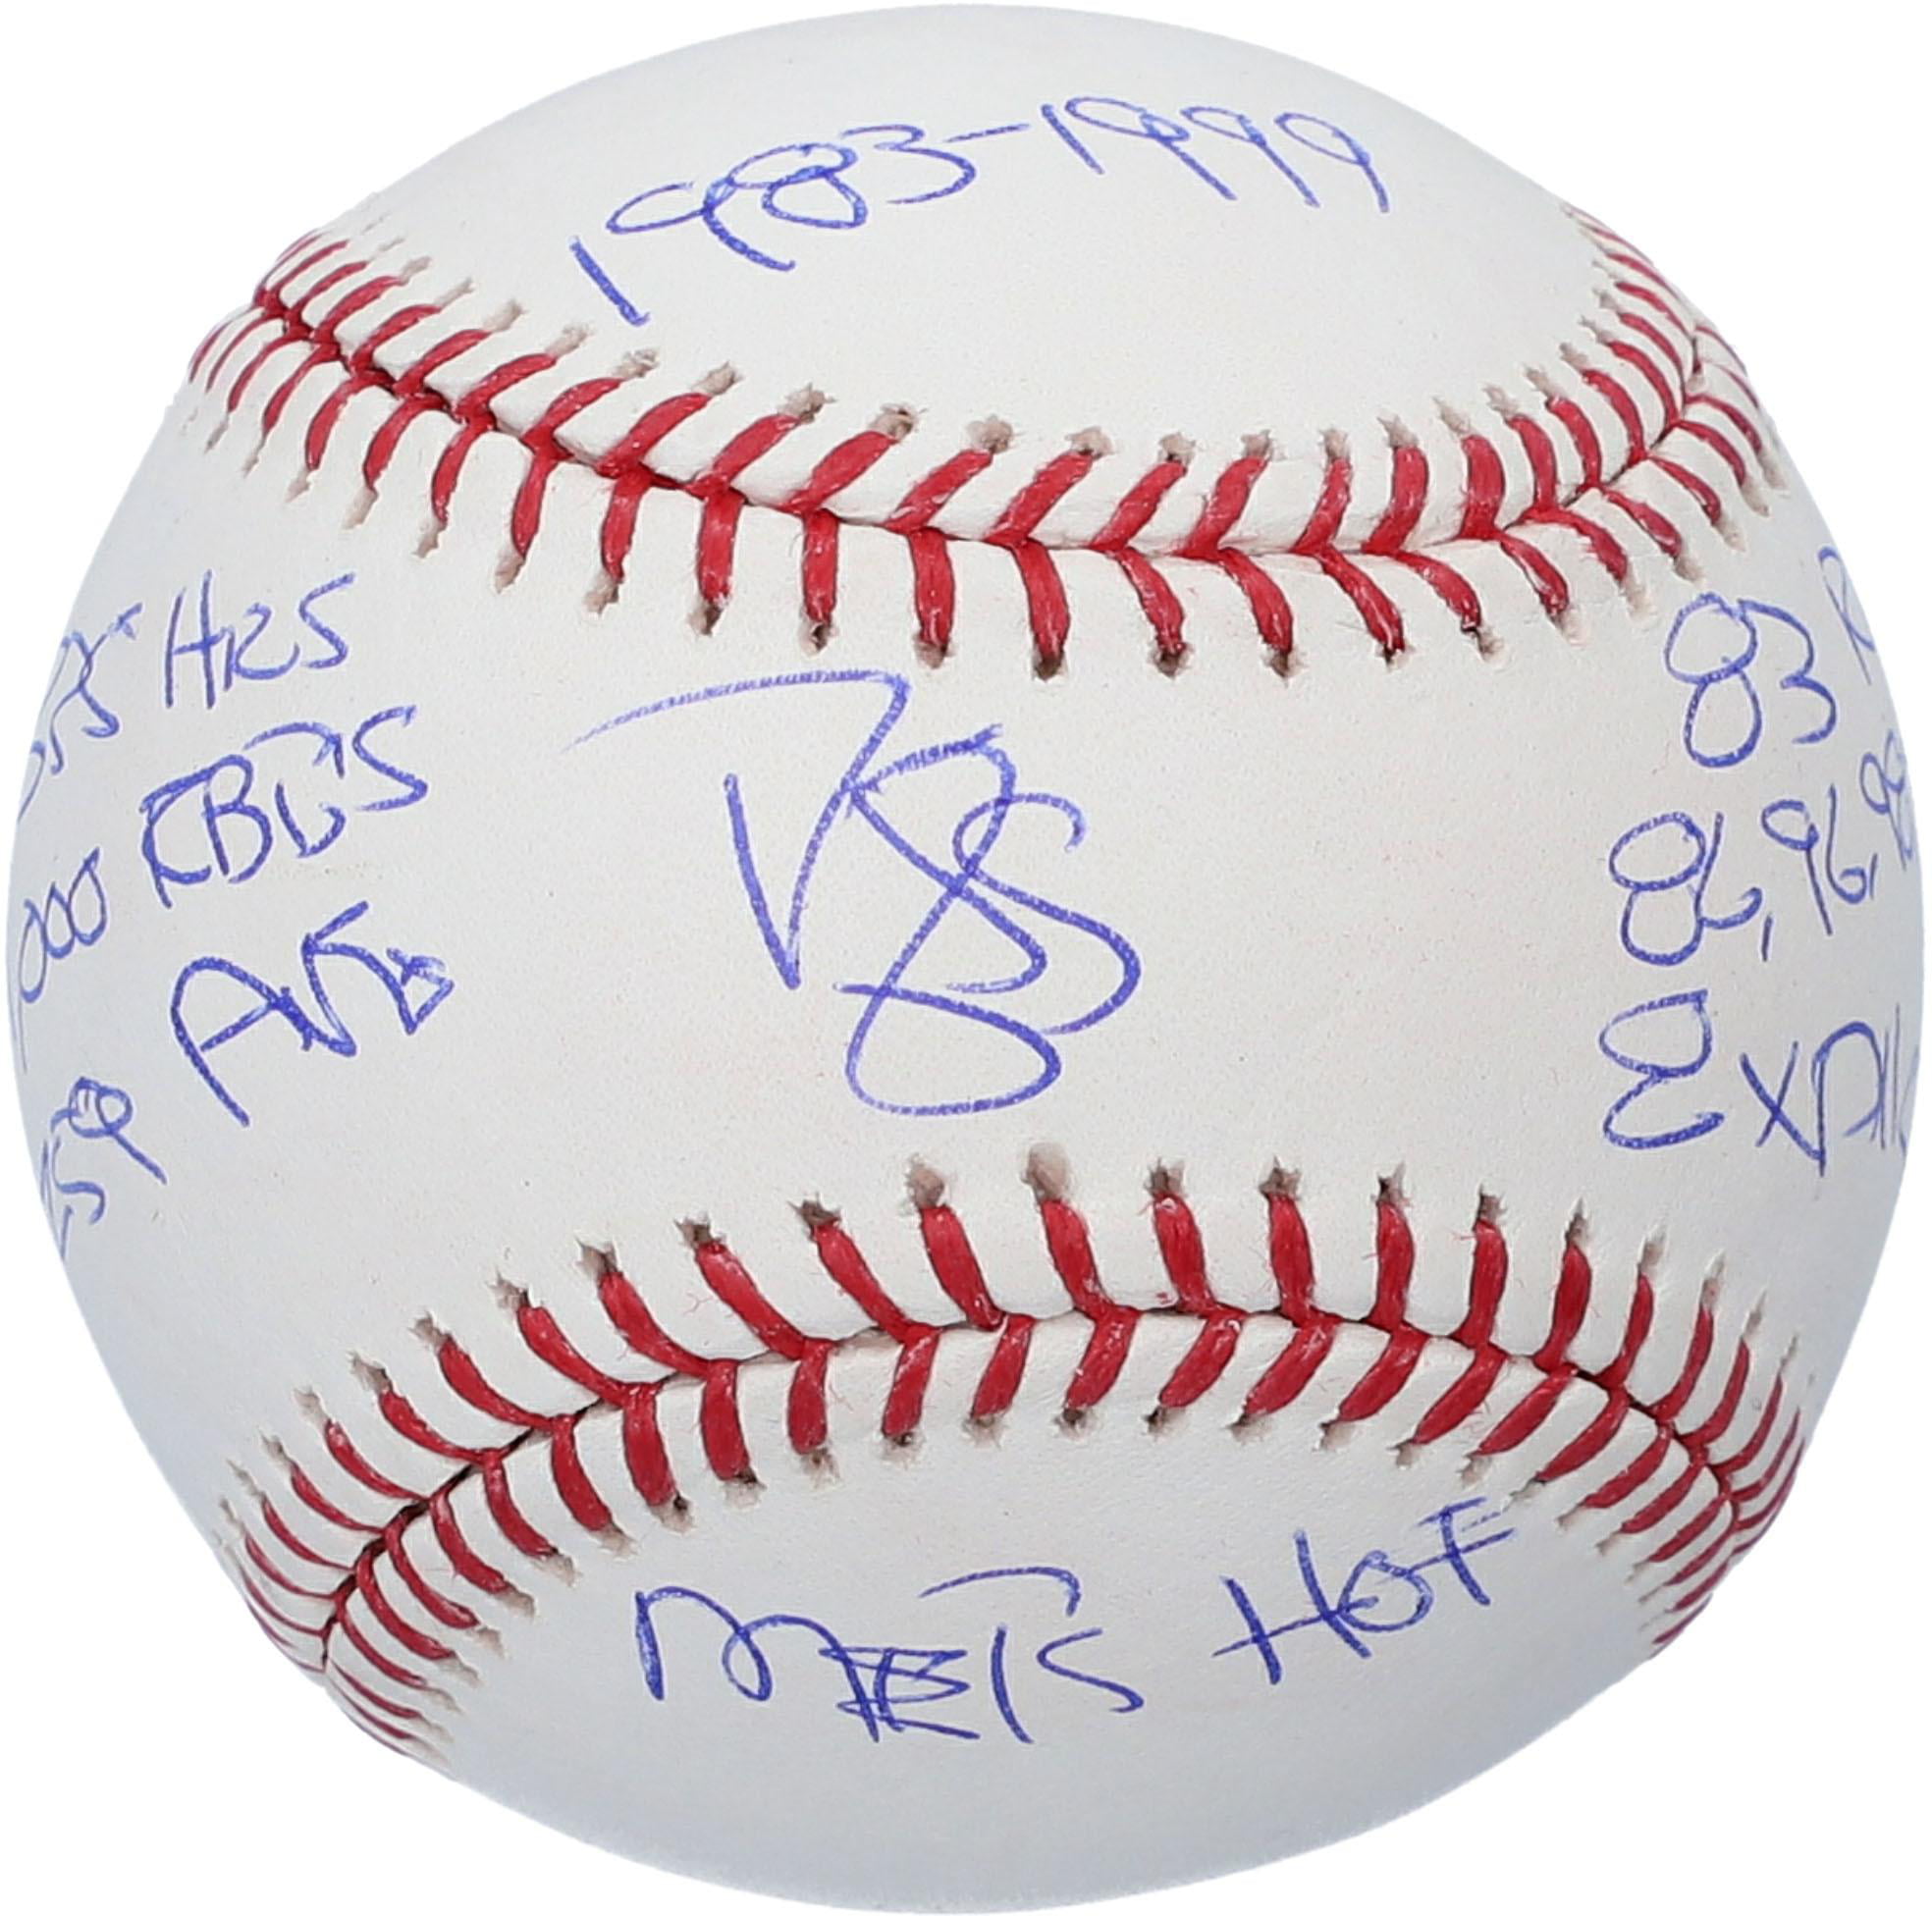 darryl strawberry autographed baseball